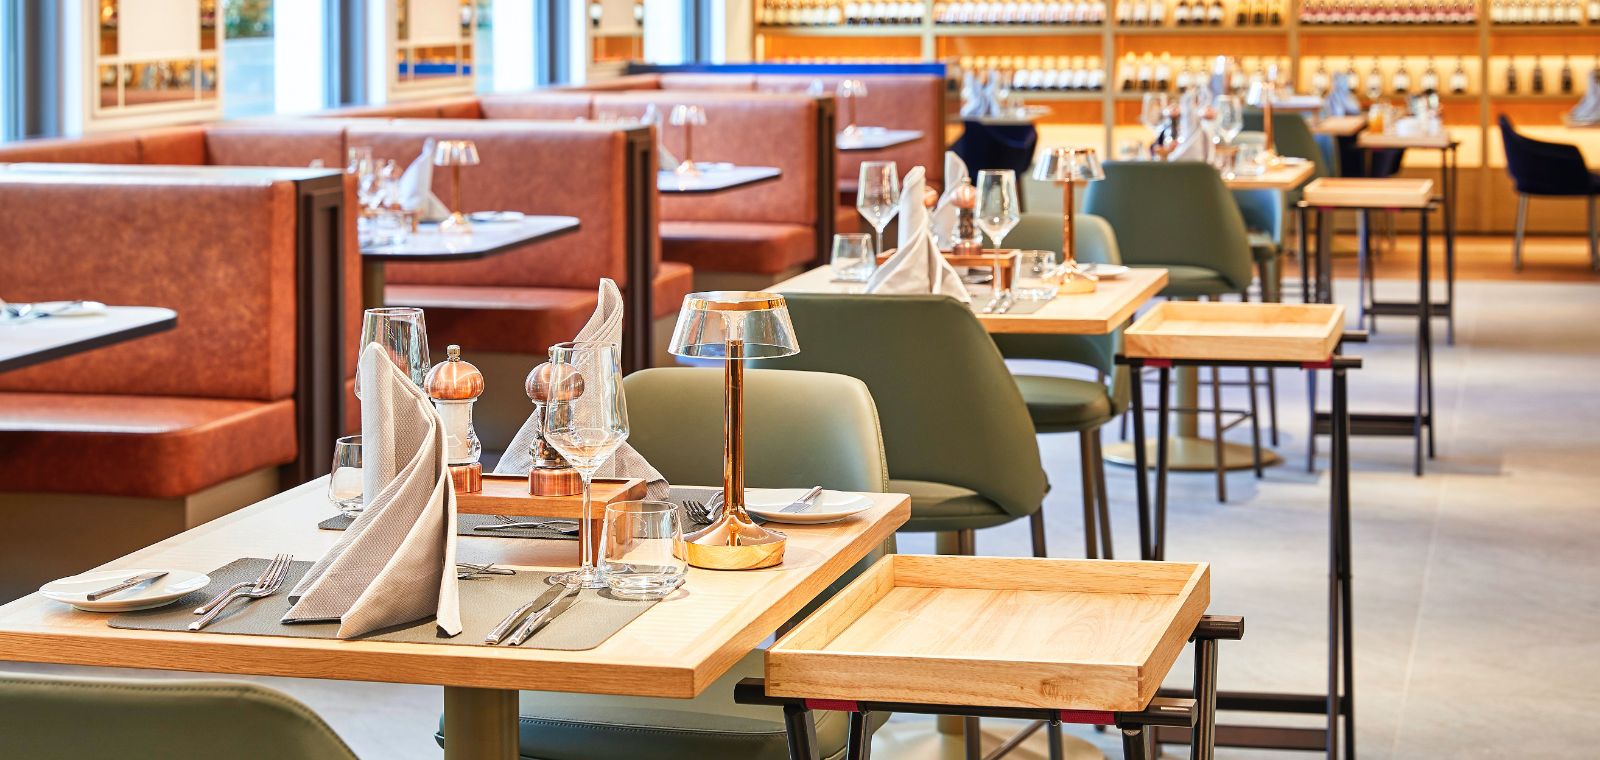 Insight into the fine dining room of Restaurant Kö59 by Björn Freitag